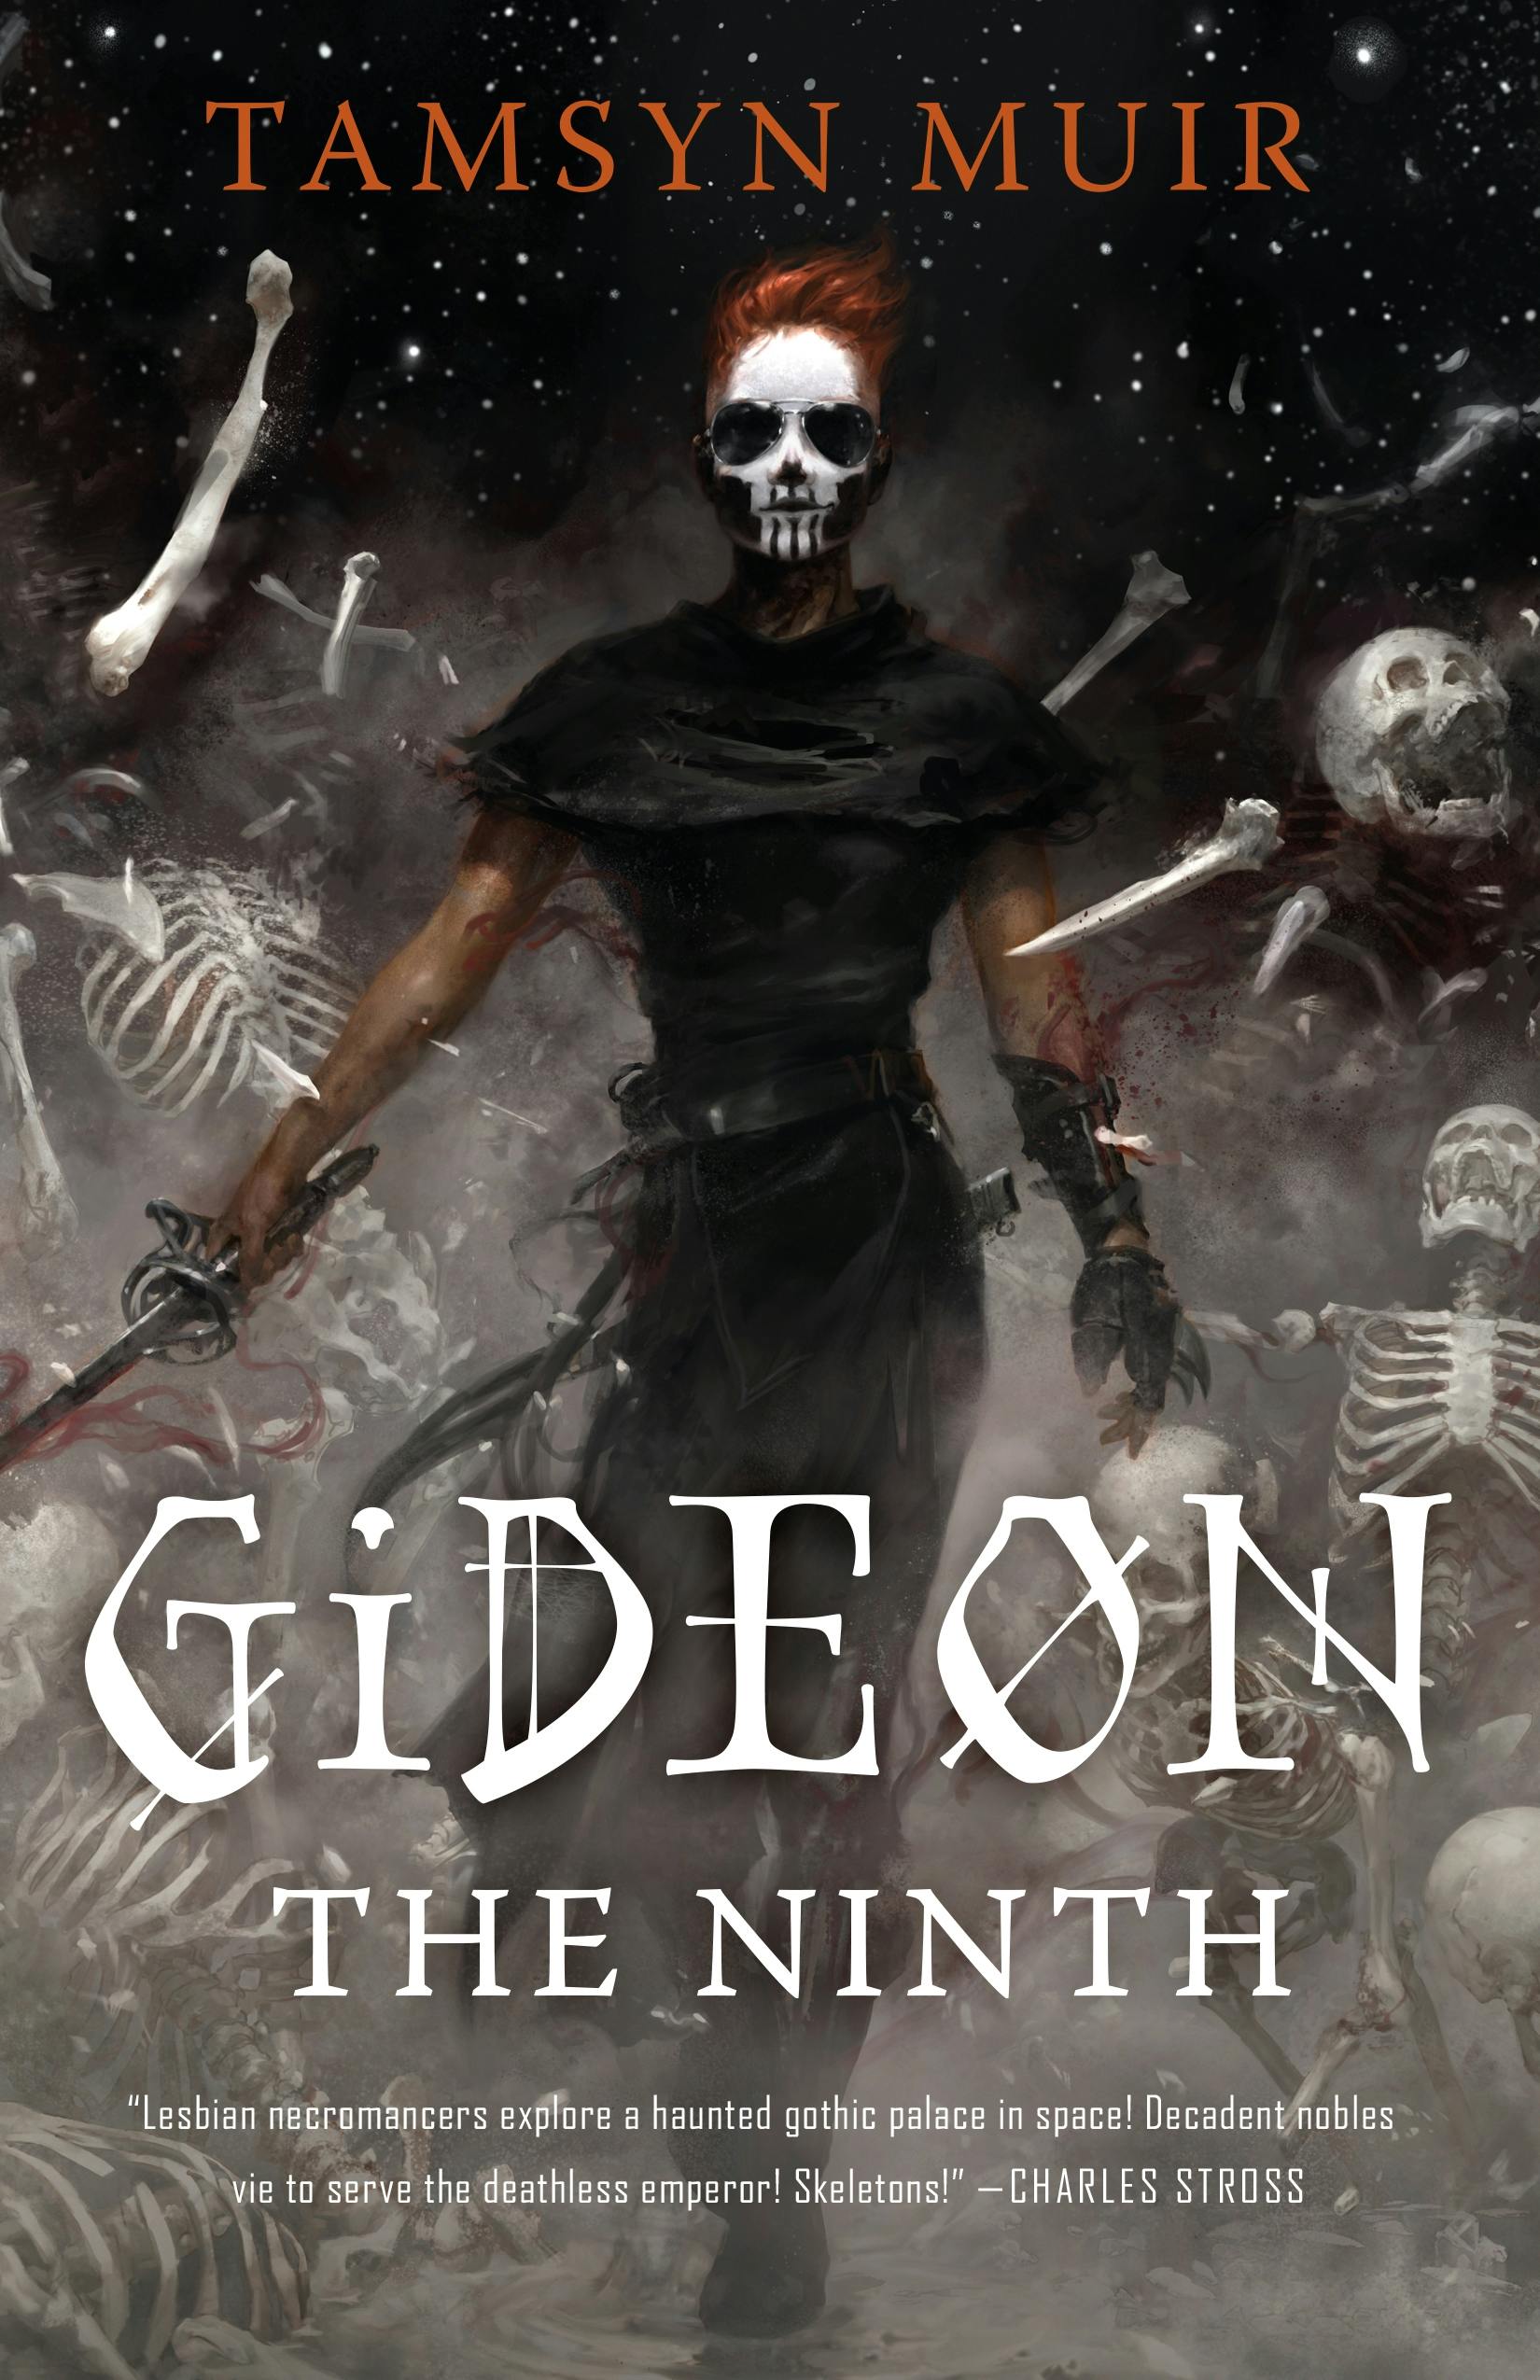 Tamsyn Muir: Gideon the Ninth (Hardcover, 2019, Tor.com)